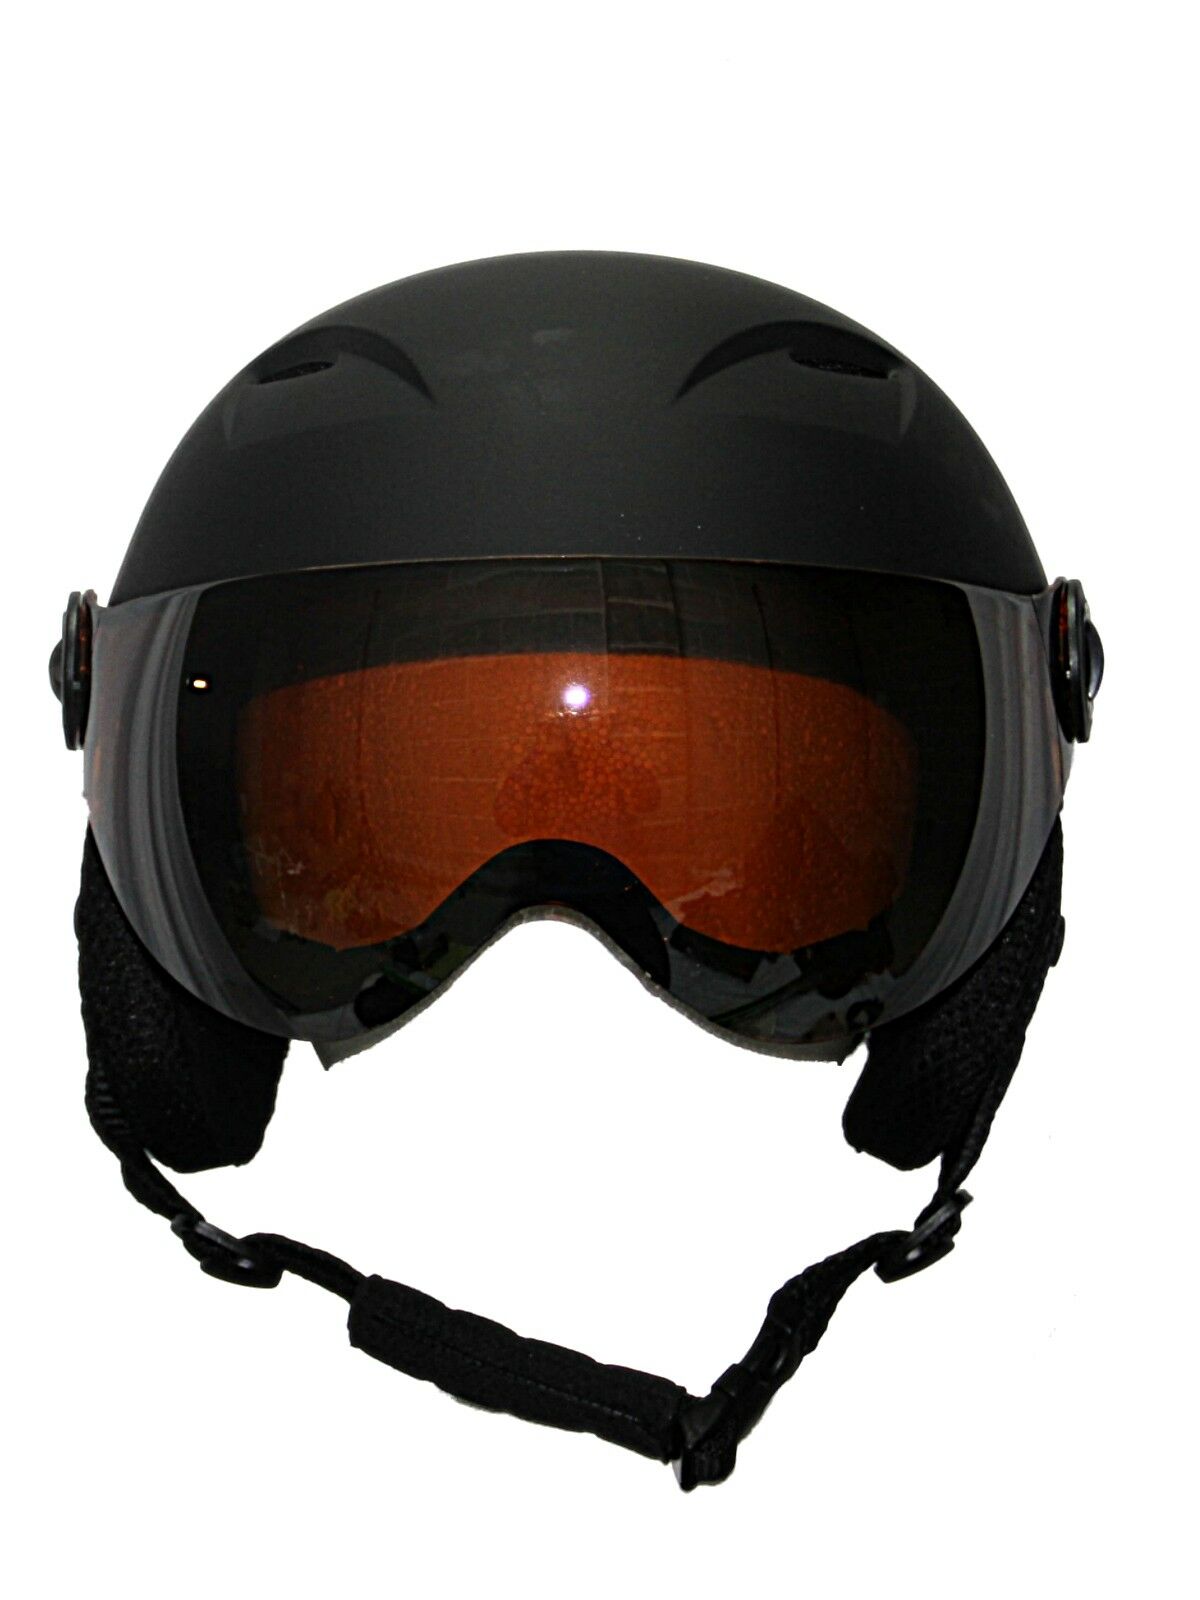 Ski Snowboard Helmet With Visor Goggles Winter Sports Black 2020 Model Wsd New